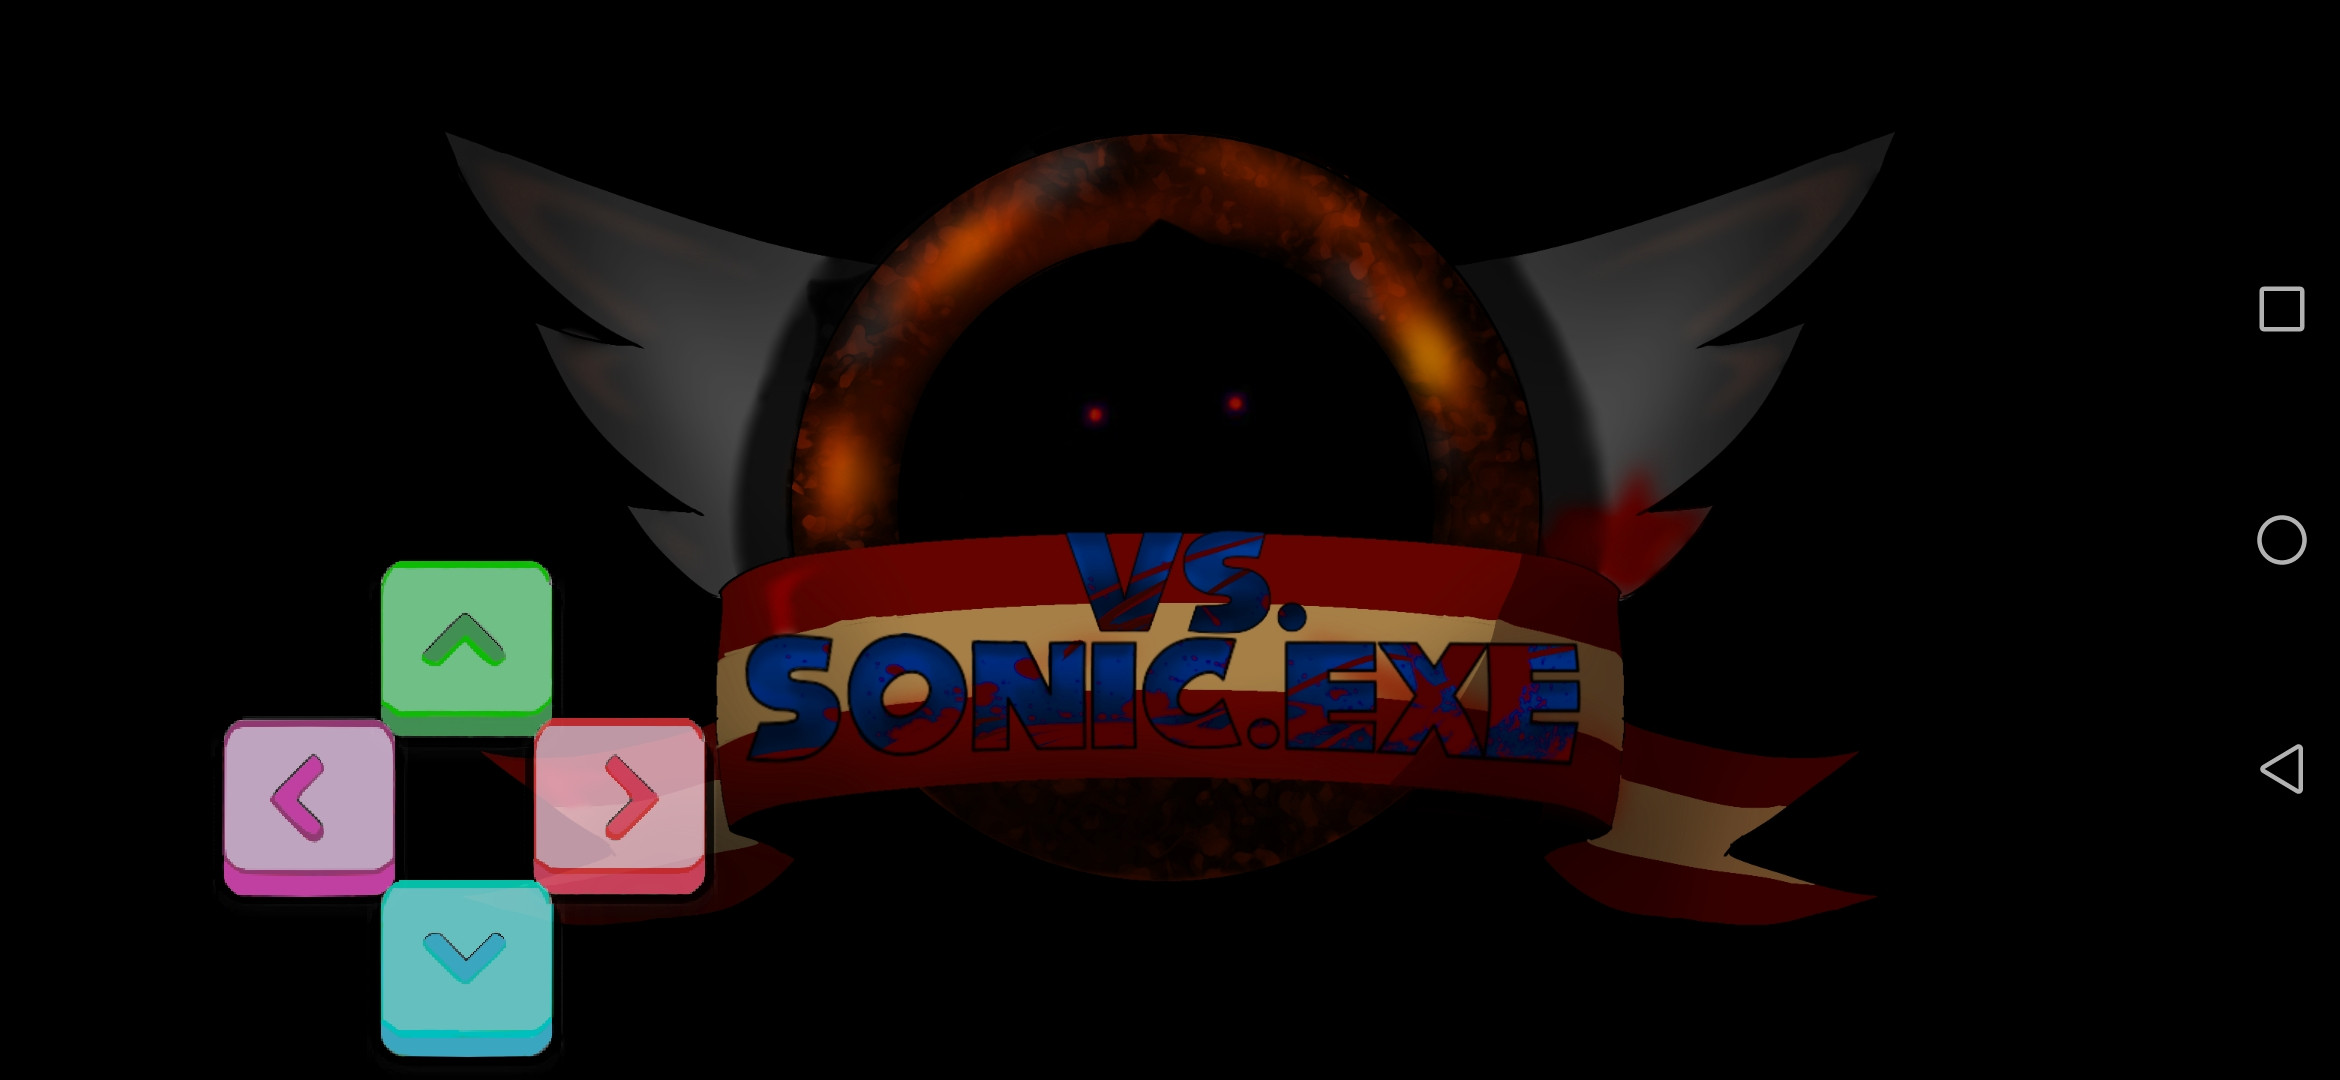 Kroko_zyabrA on X: My own Sonic.exe: sonic.apk! #SonicTheHedgehog  #sonicexe #fridaynightfunkin  / X